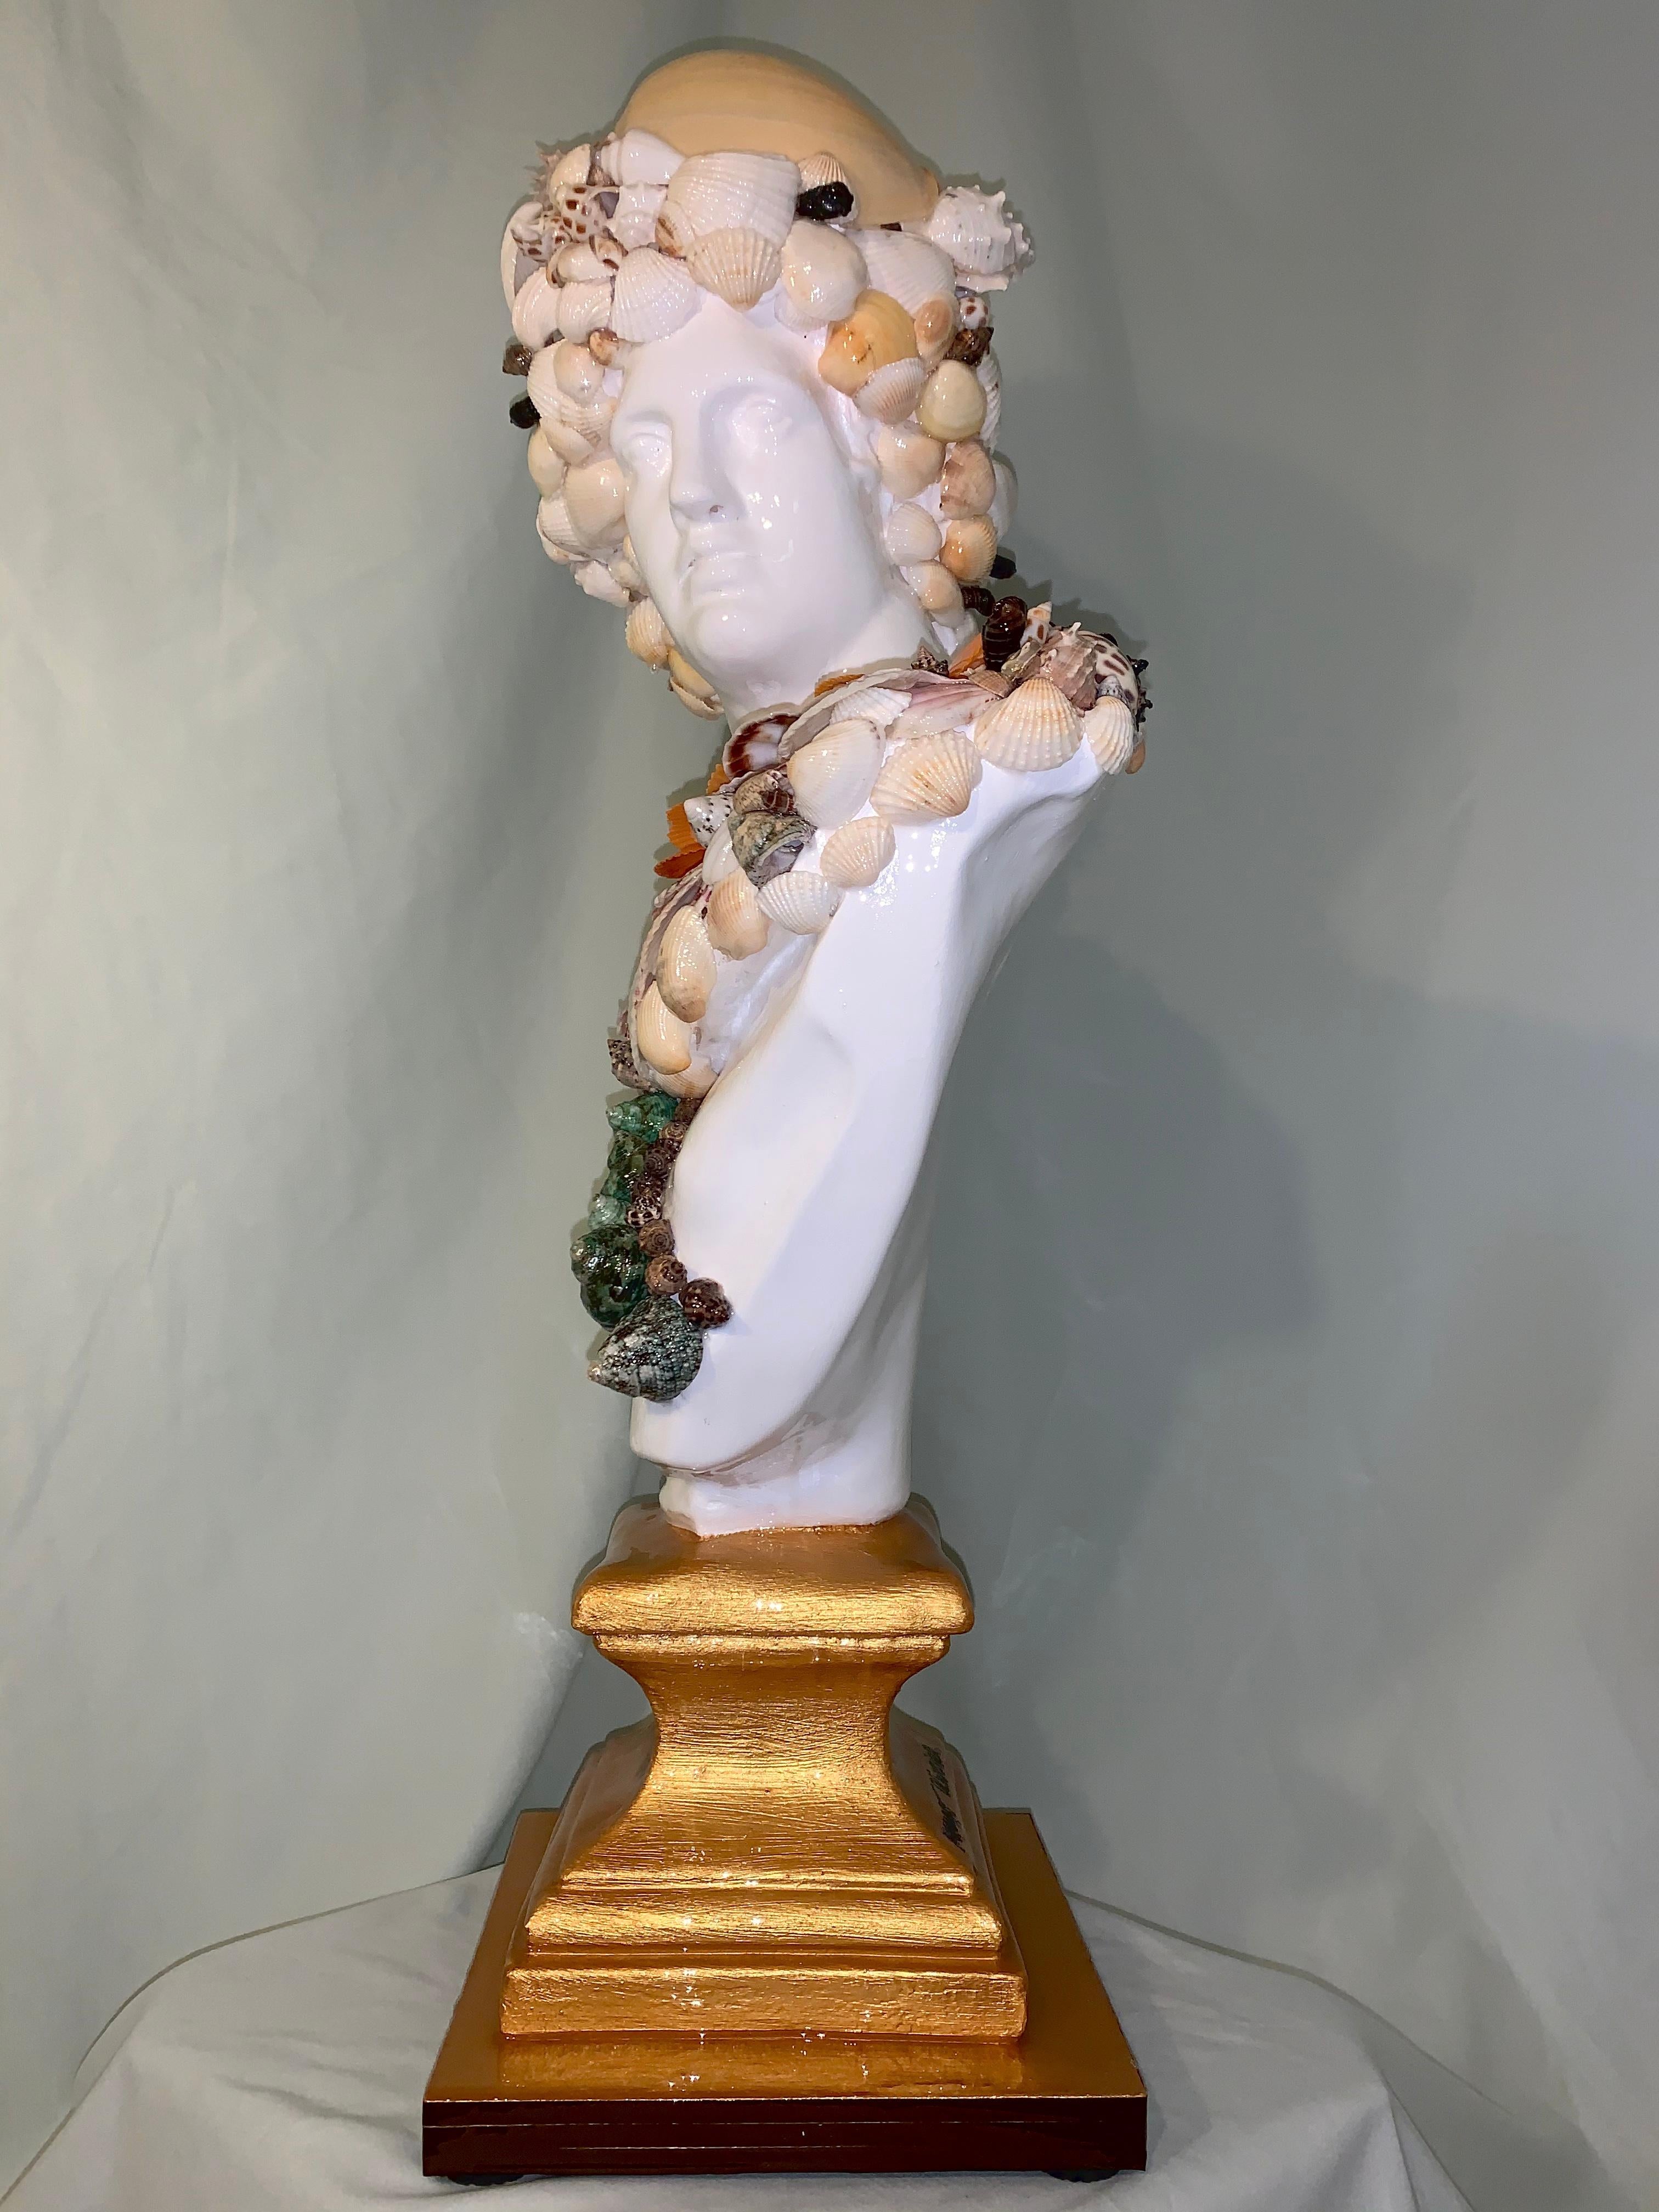 Seashells Encrusted Apollo&Diana Sculpture Pair (Original MixedMedia Sculptures) - Gray Figurative Sculpture by Mauro Oliveira